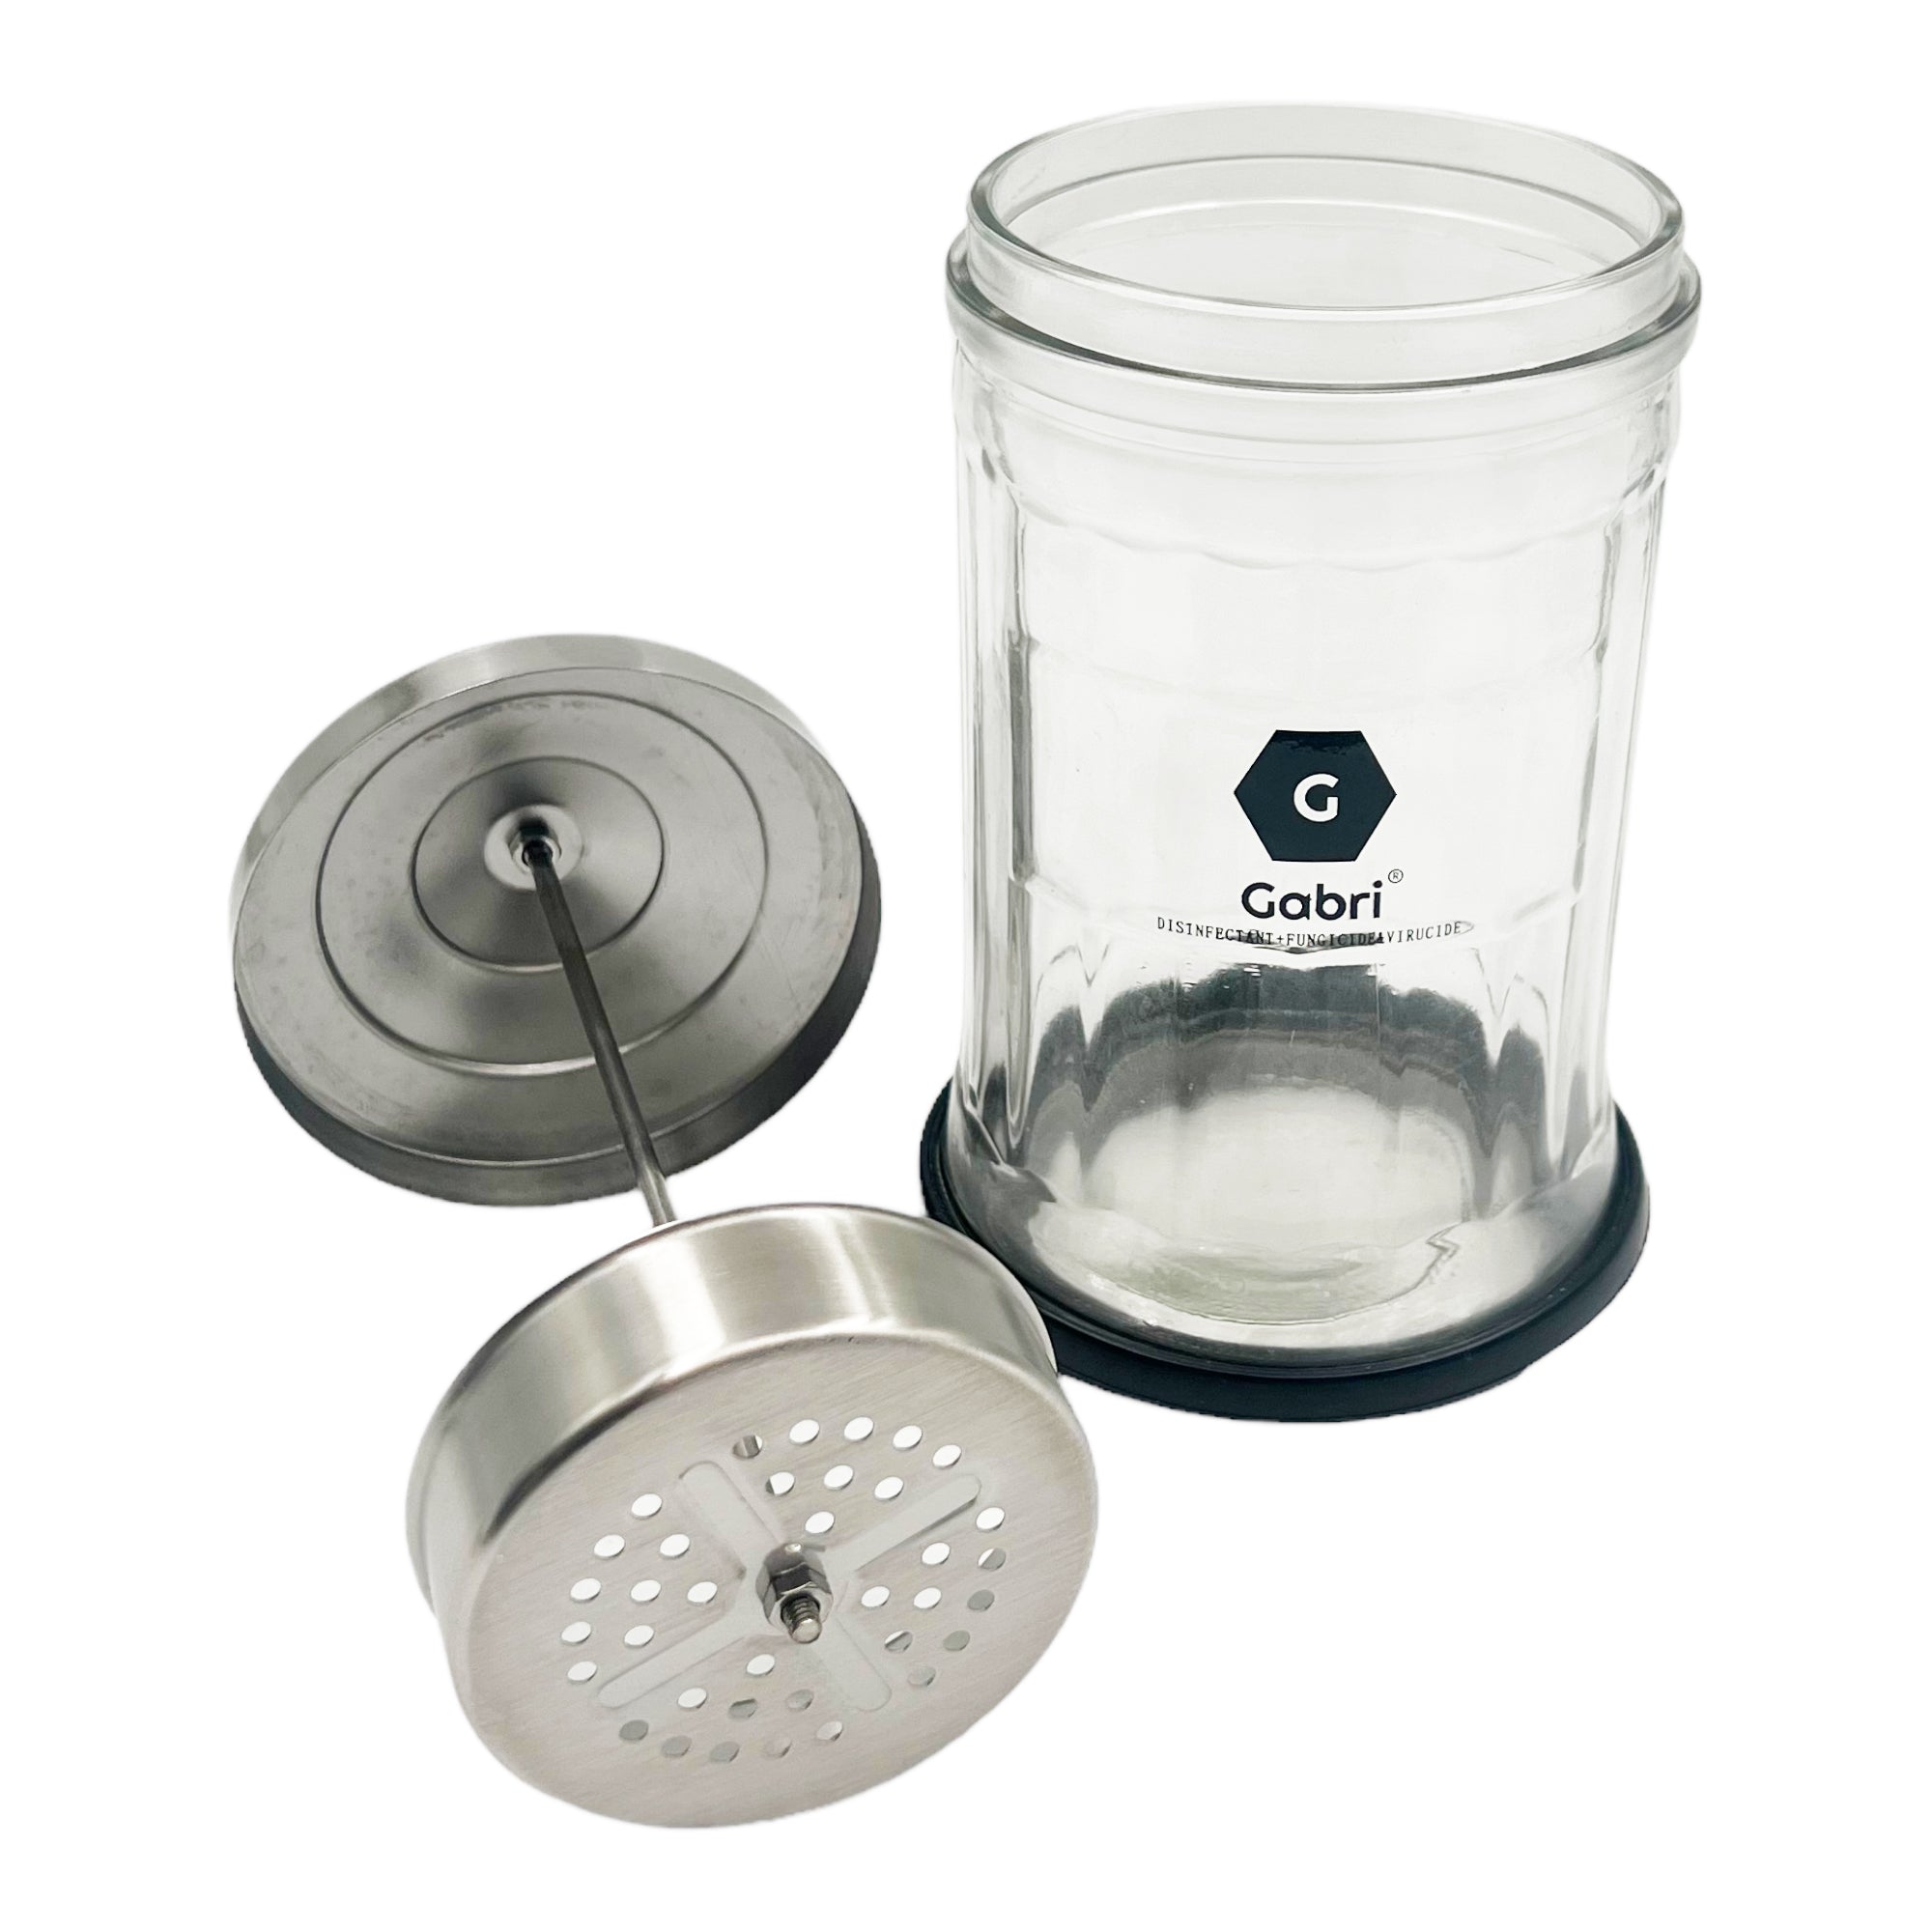 Gabri - Disinfectant Jar Sanitizer Germicide Jar for Salon Scissors Tools Small (621 ML)